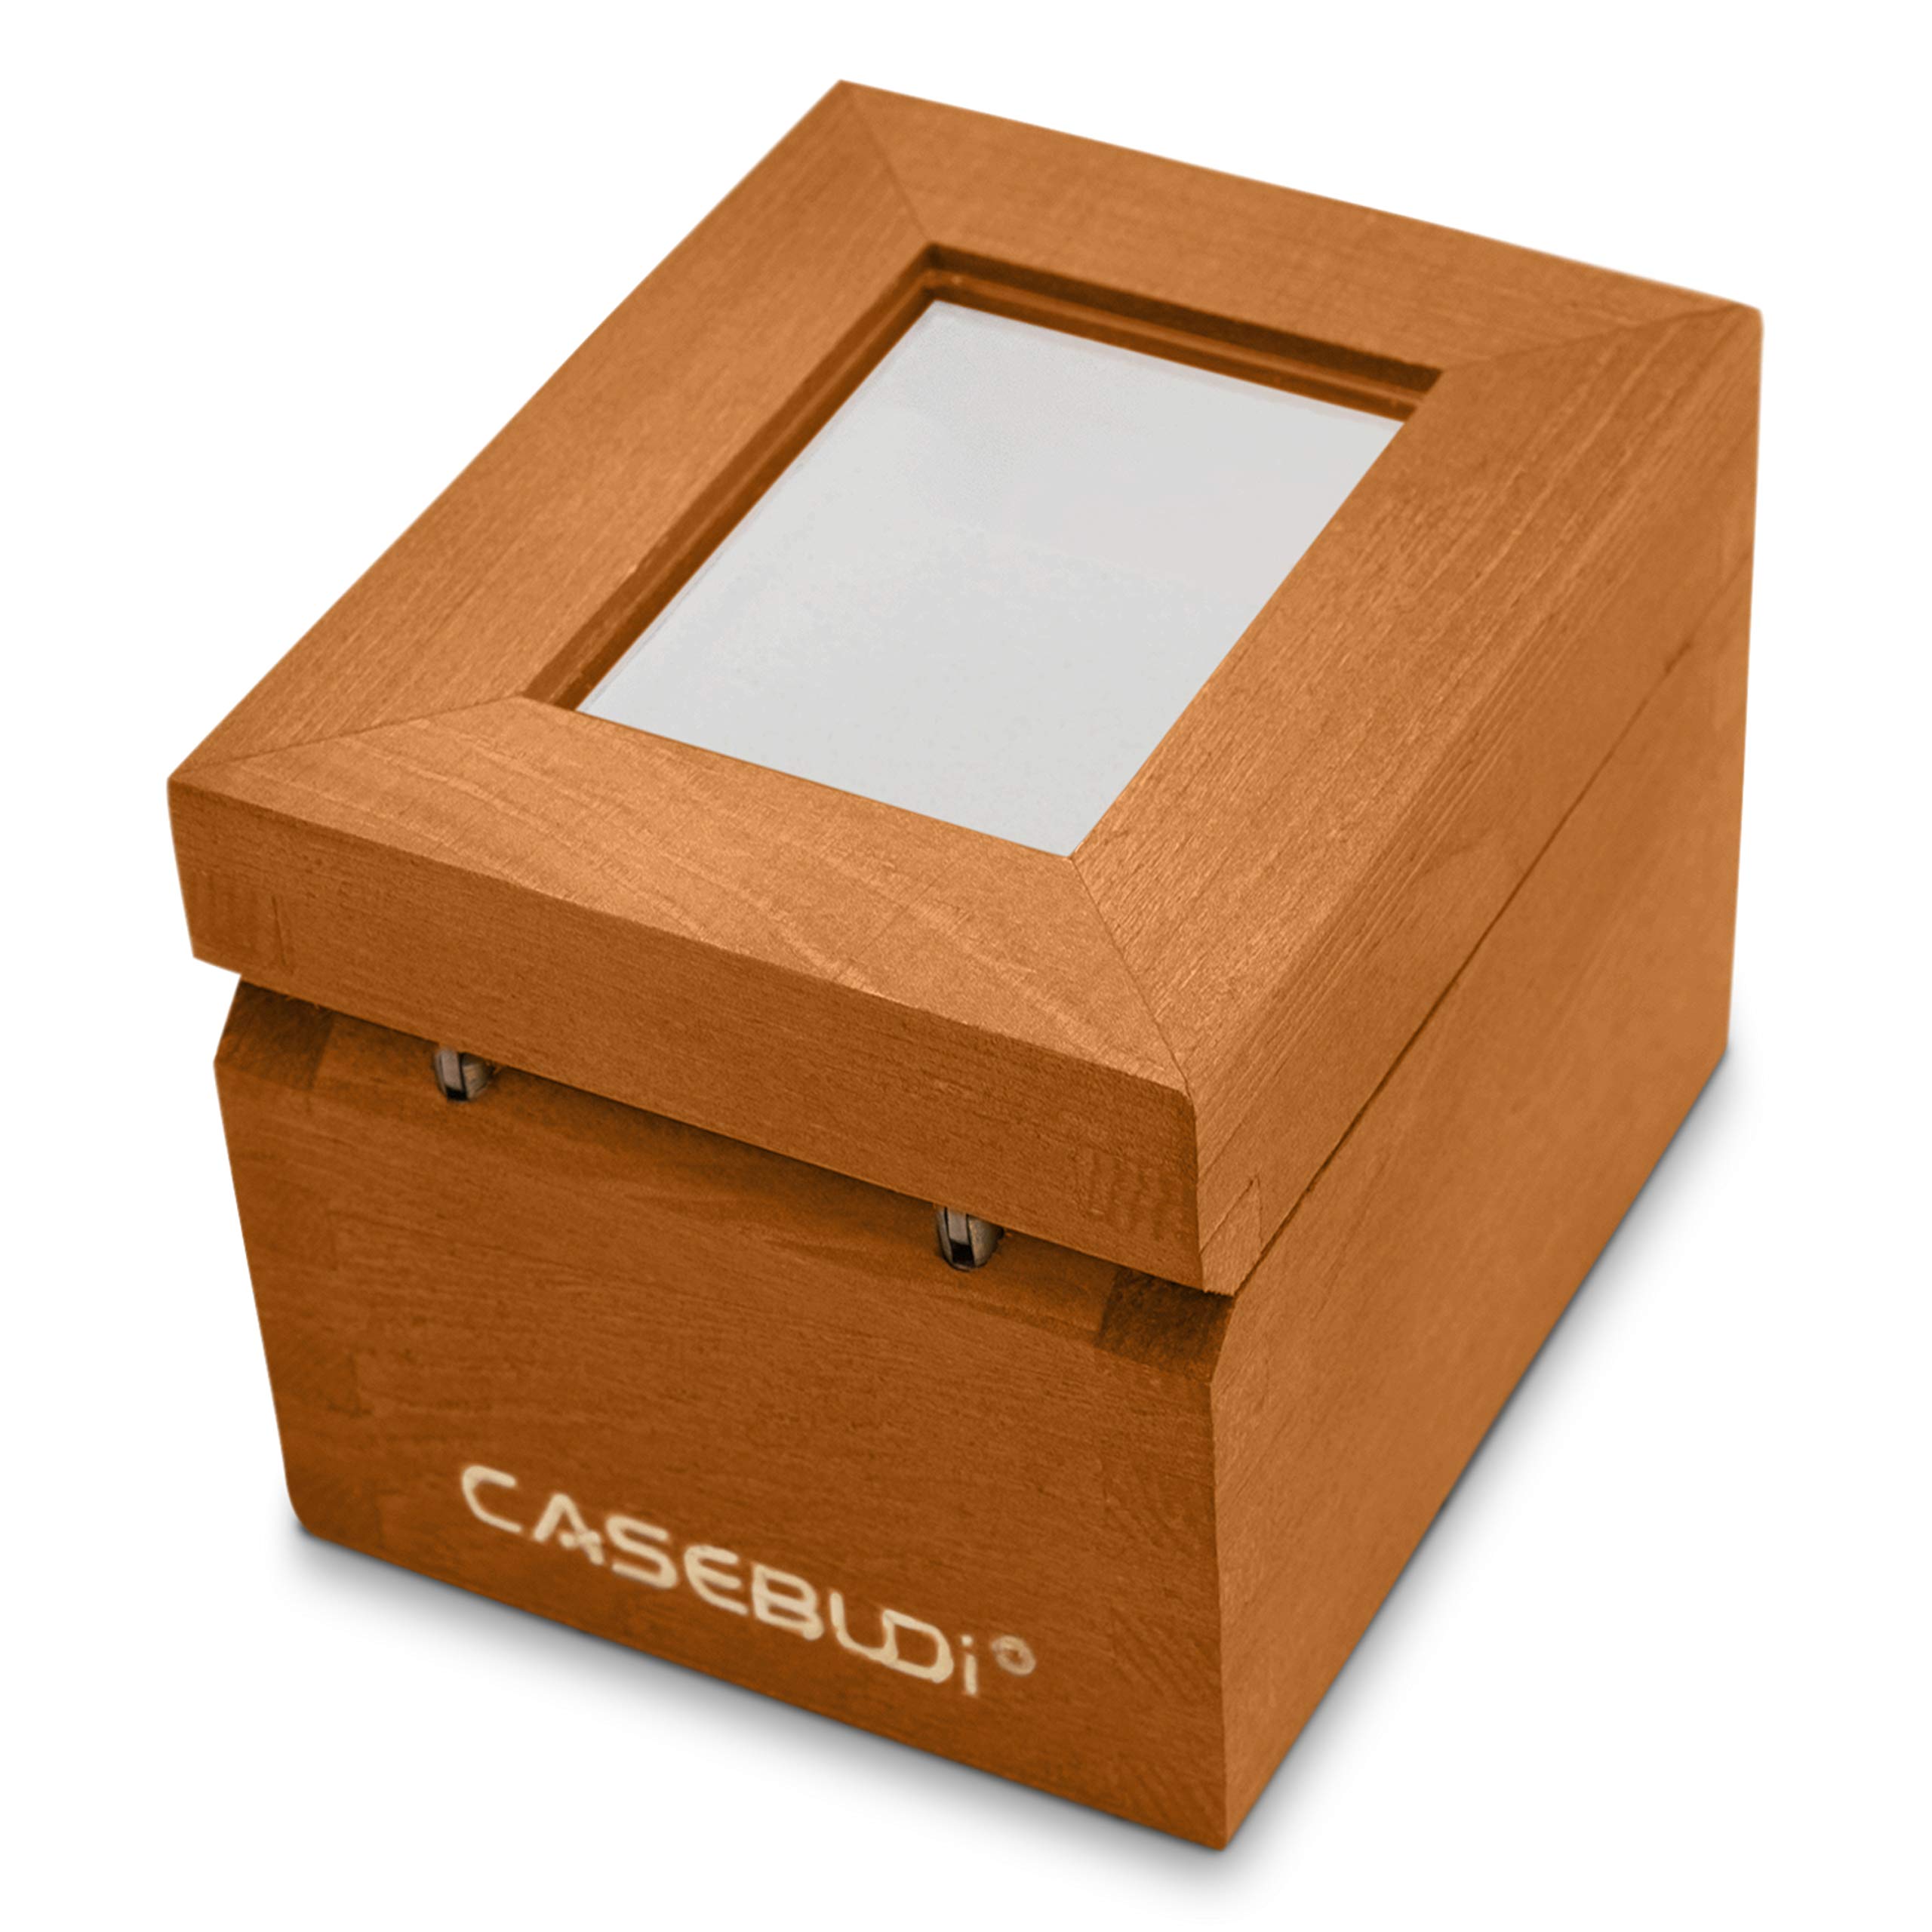 CASEBUDi Single Wood Watch Display and Gift Box (Sienna)